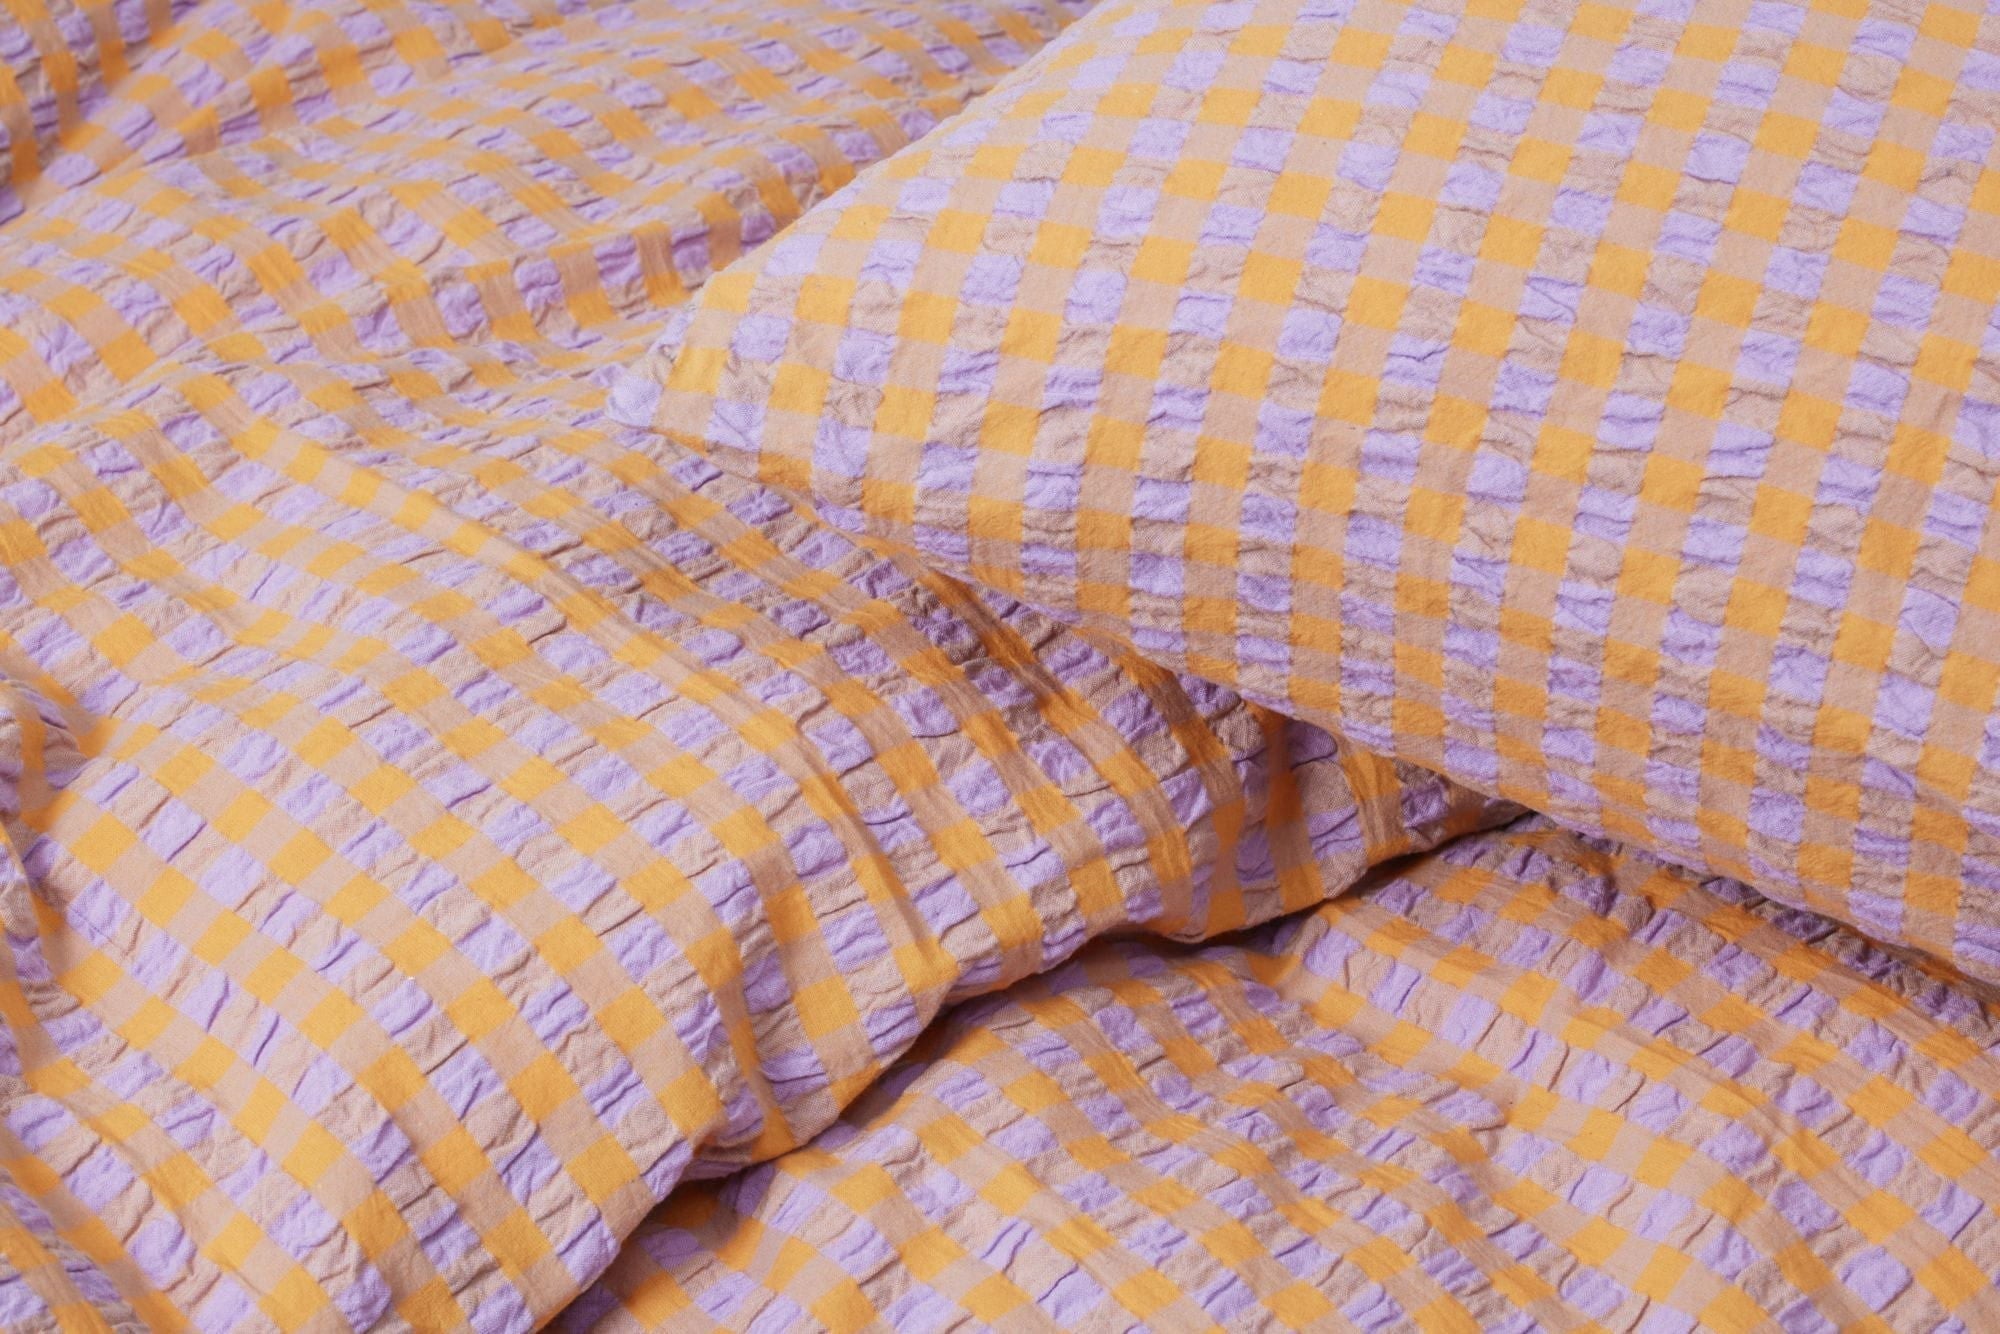 Juna Bæk & Bølge bed linnen 200x220 cm, lavendel blauw/perzik